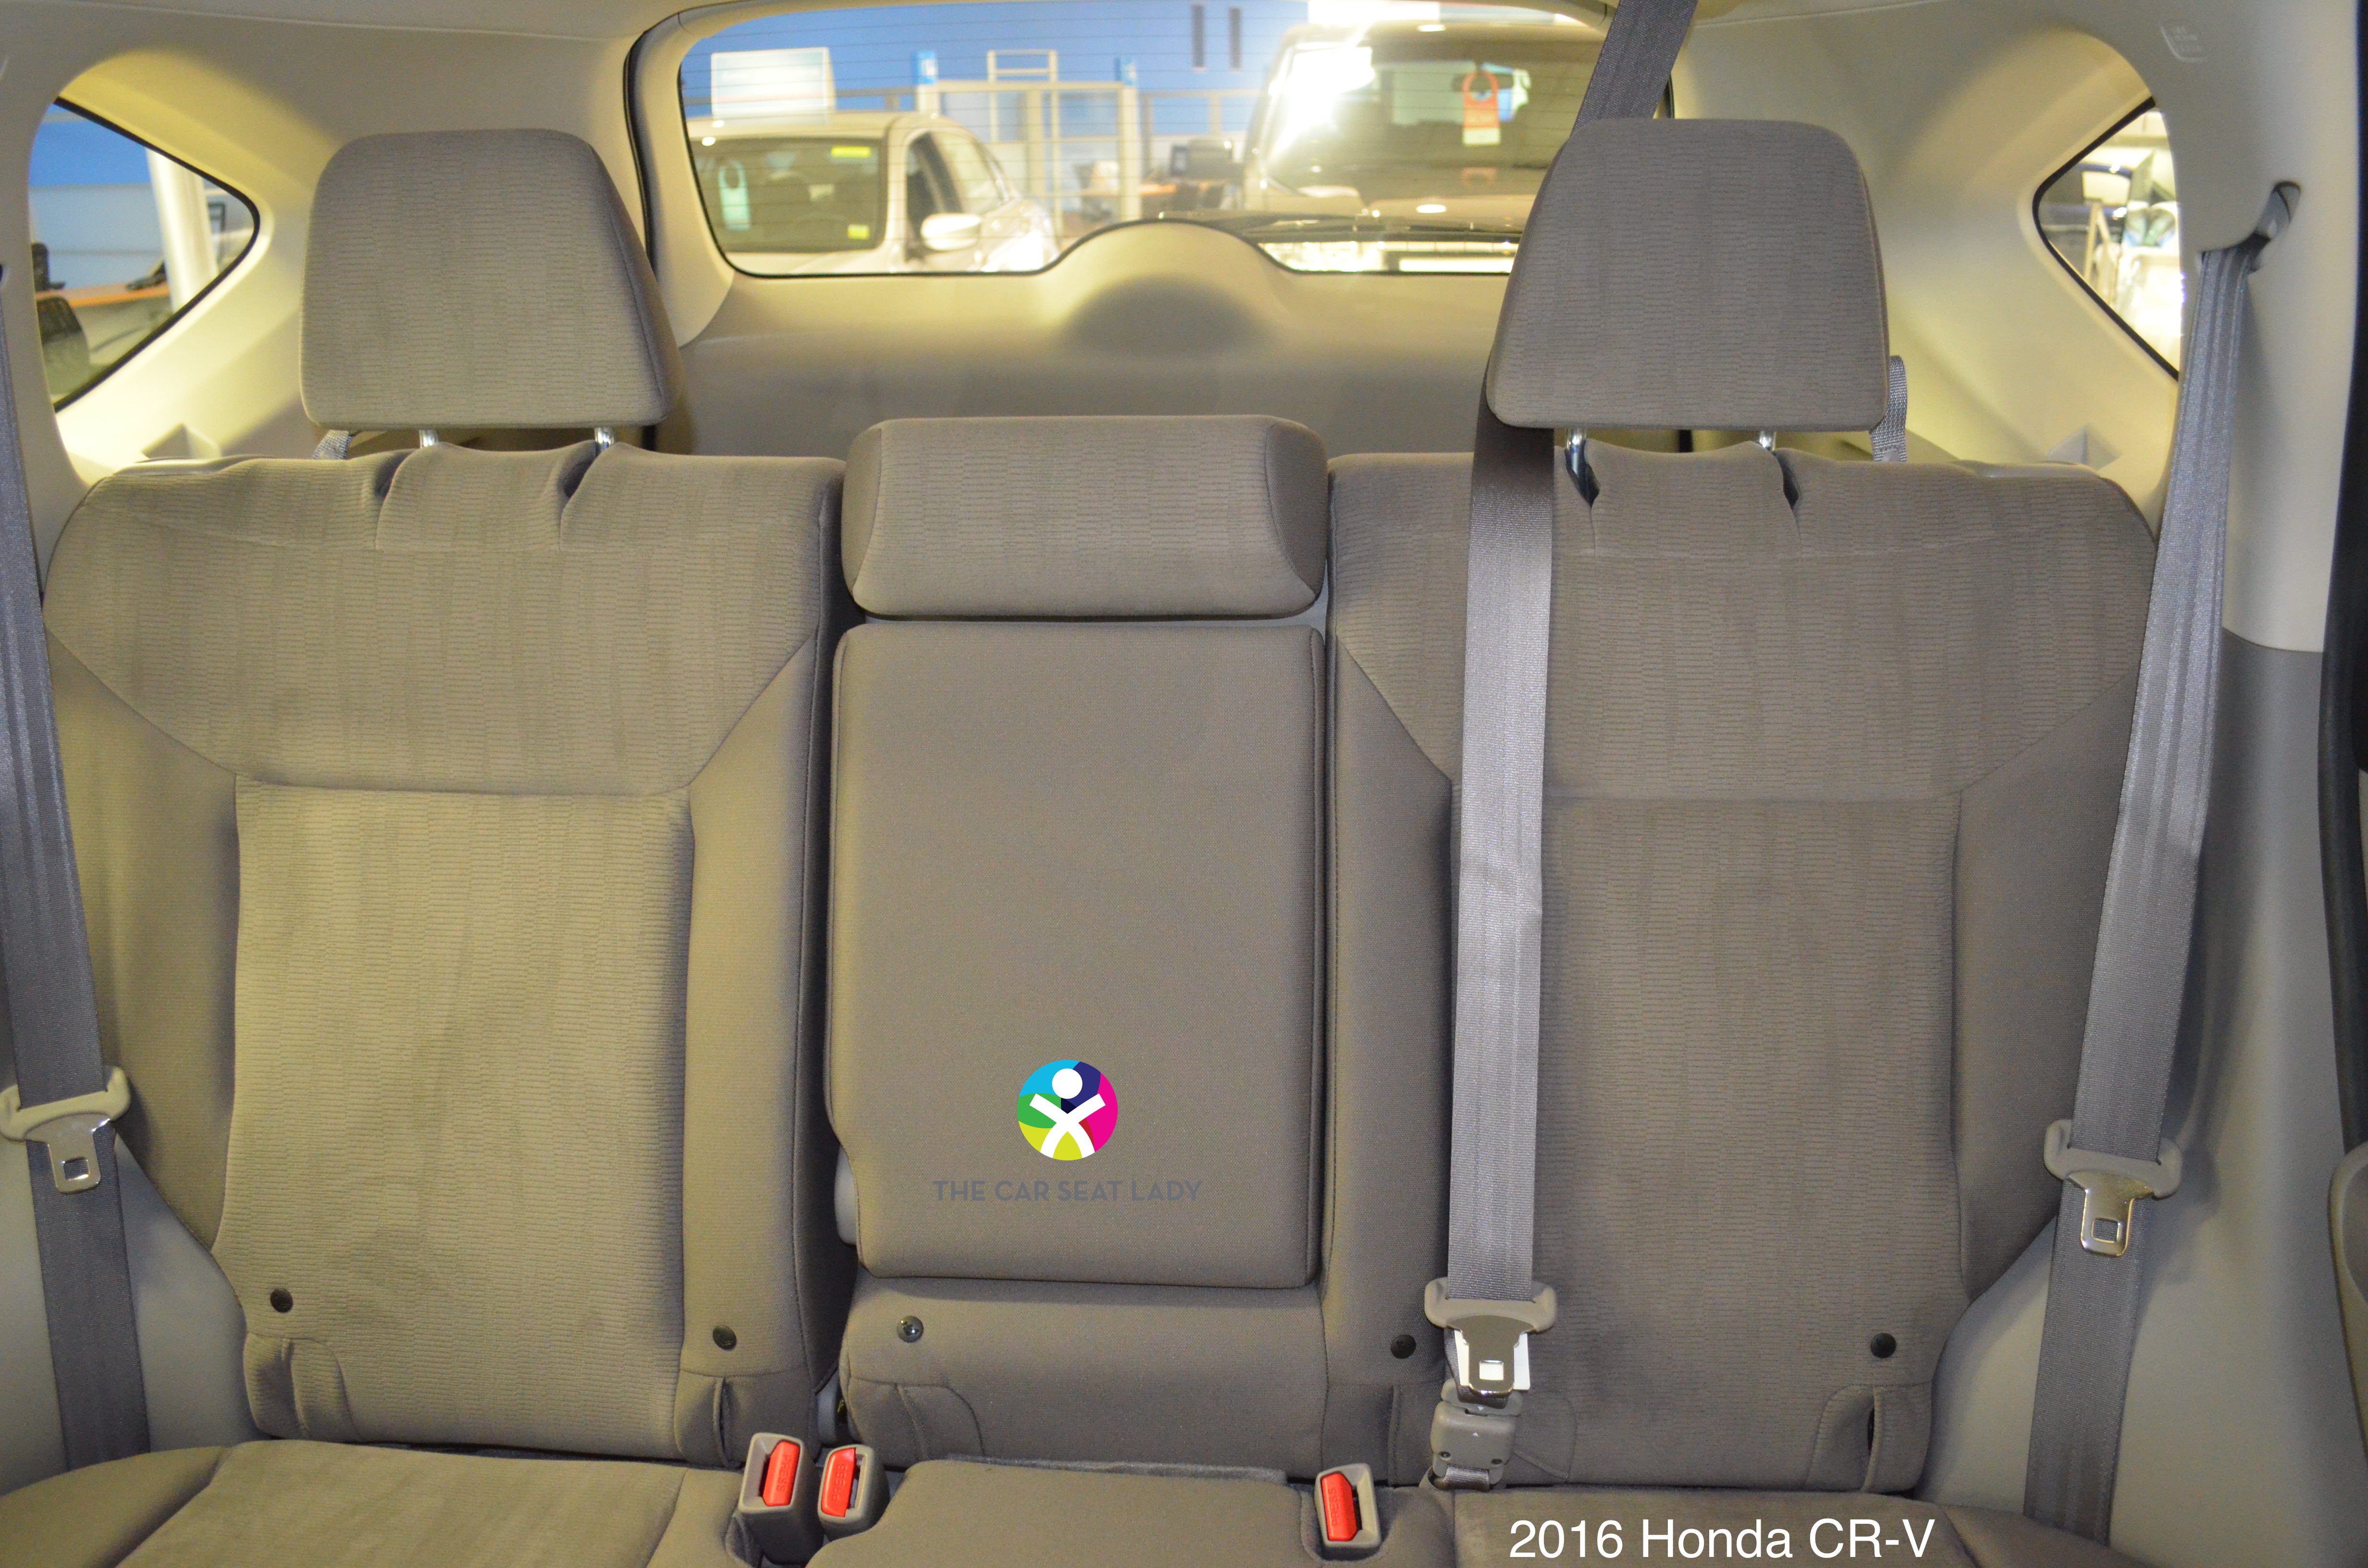 The Car Seat LadyHonda CR-V - The Car 